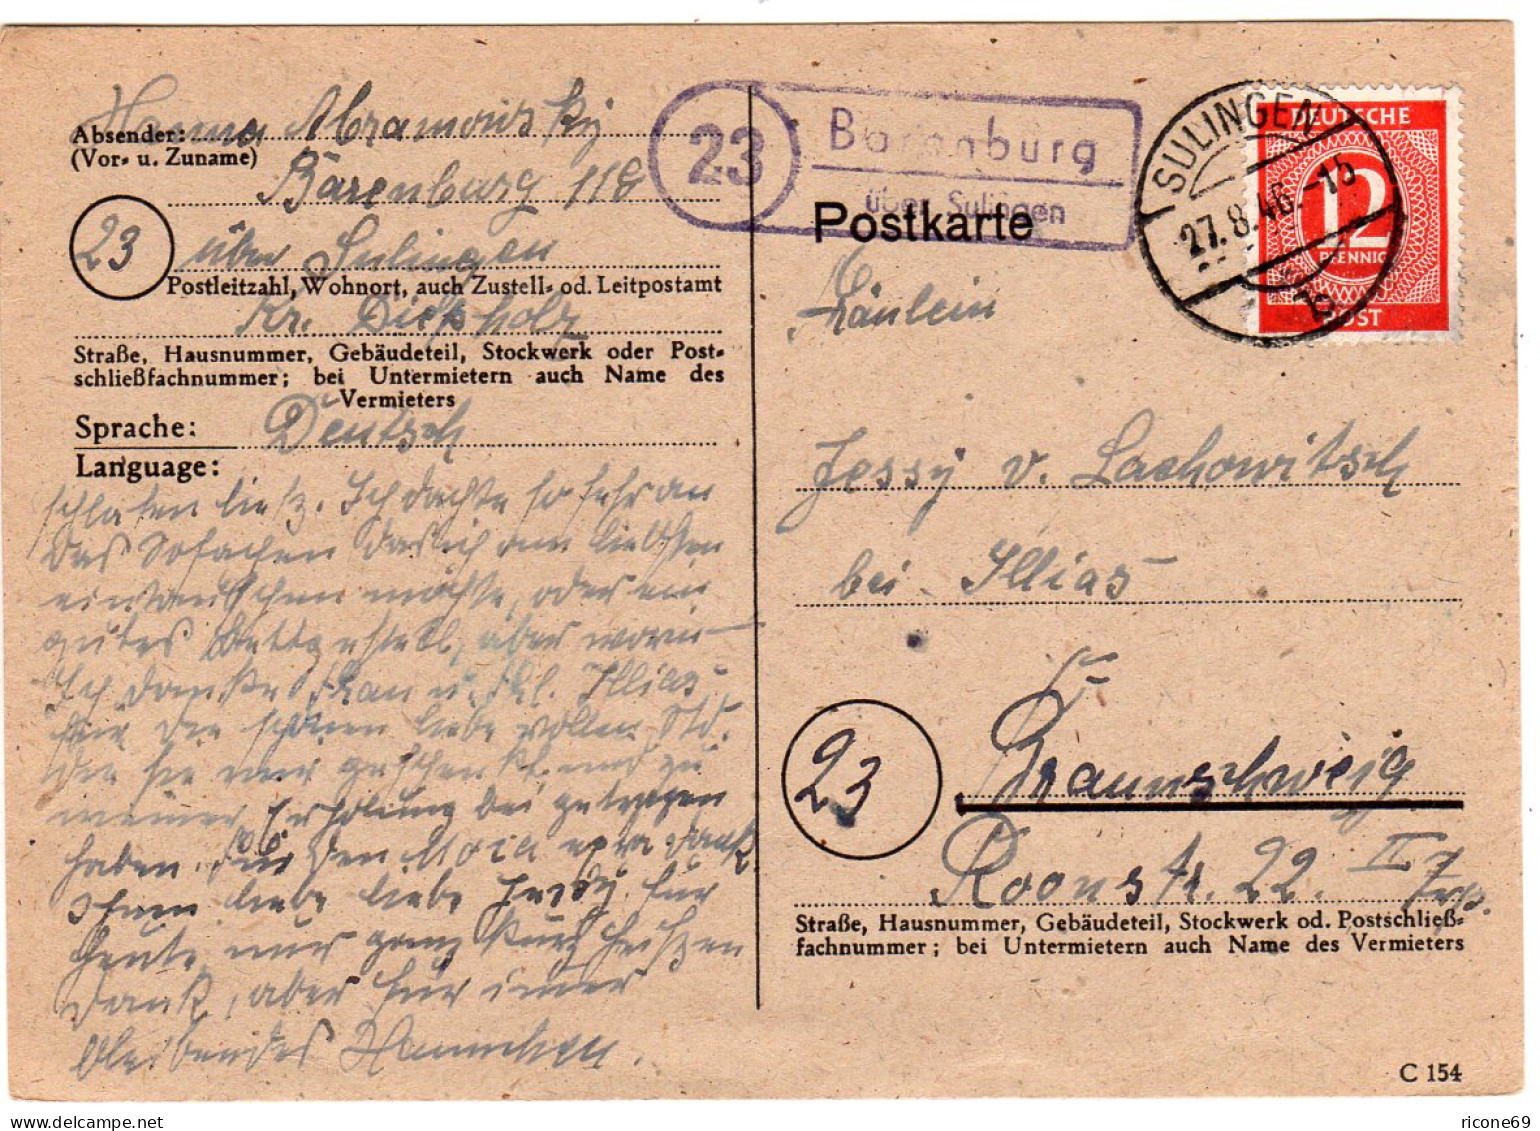 1946, Landpost Stpl. 23 BARENBURG über Sulingen Auf Karte M. 12 Pf.  - Covers & Documents